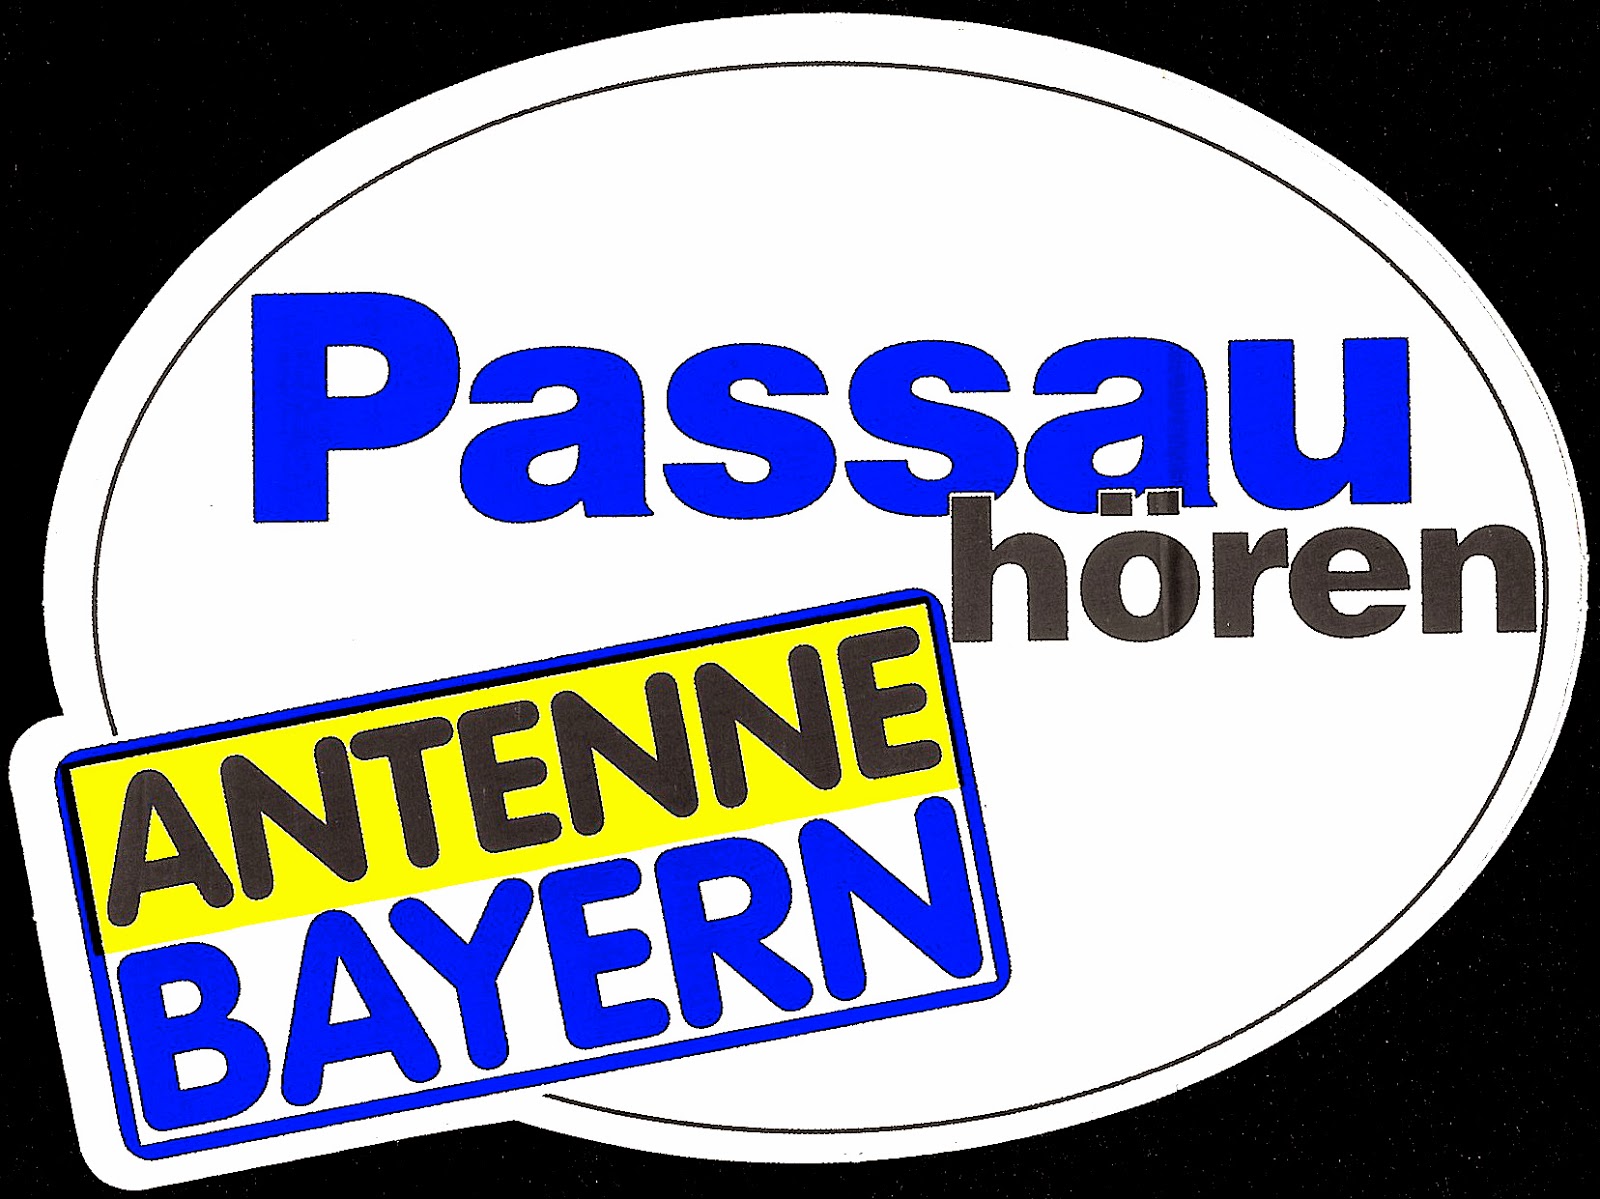 Antenne Bayern Charts